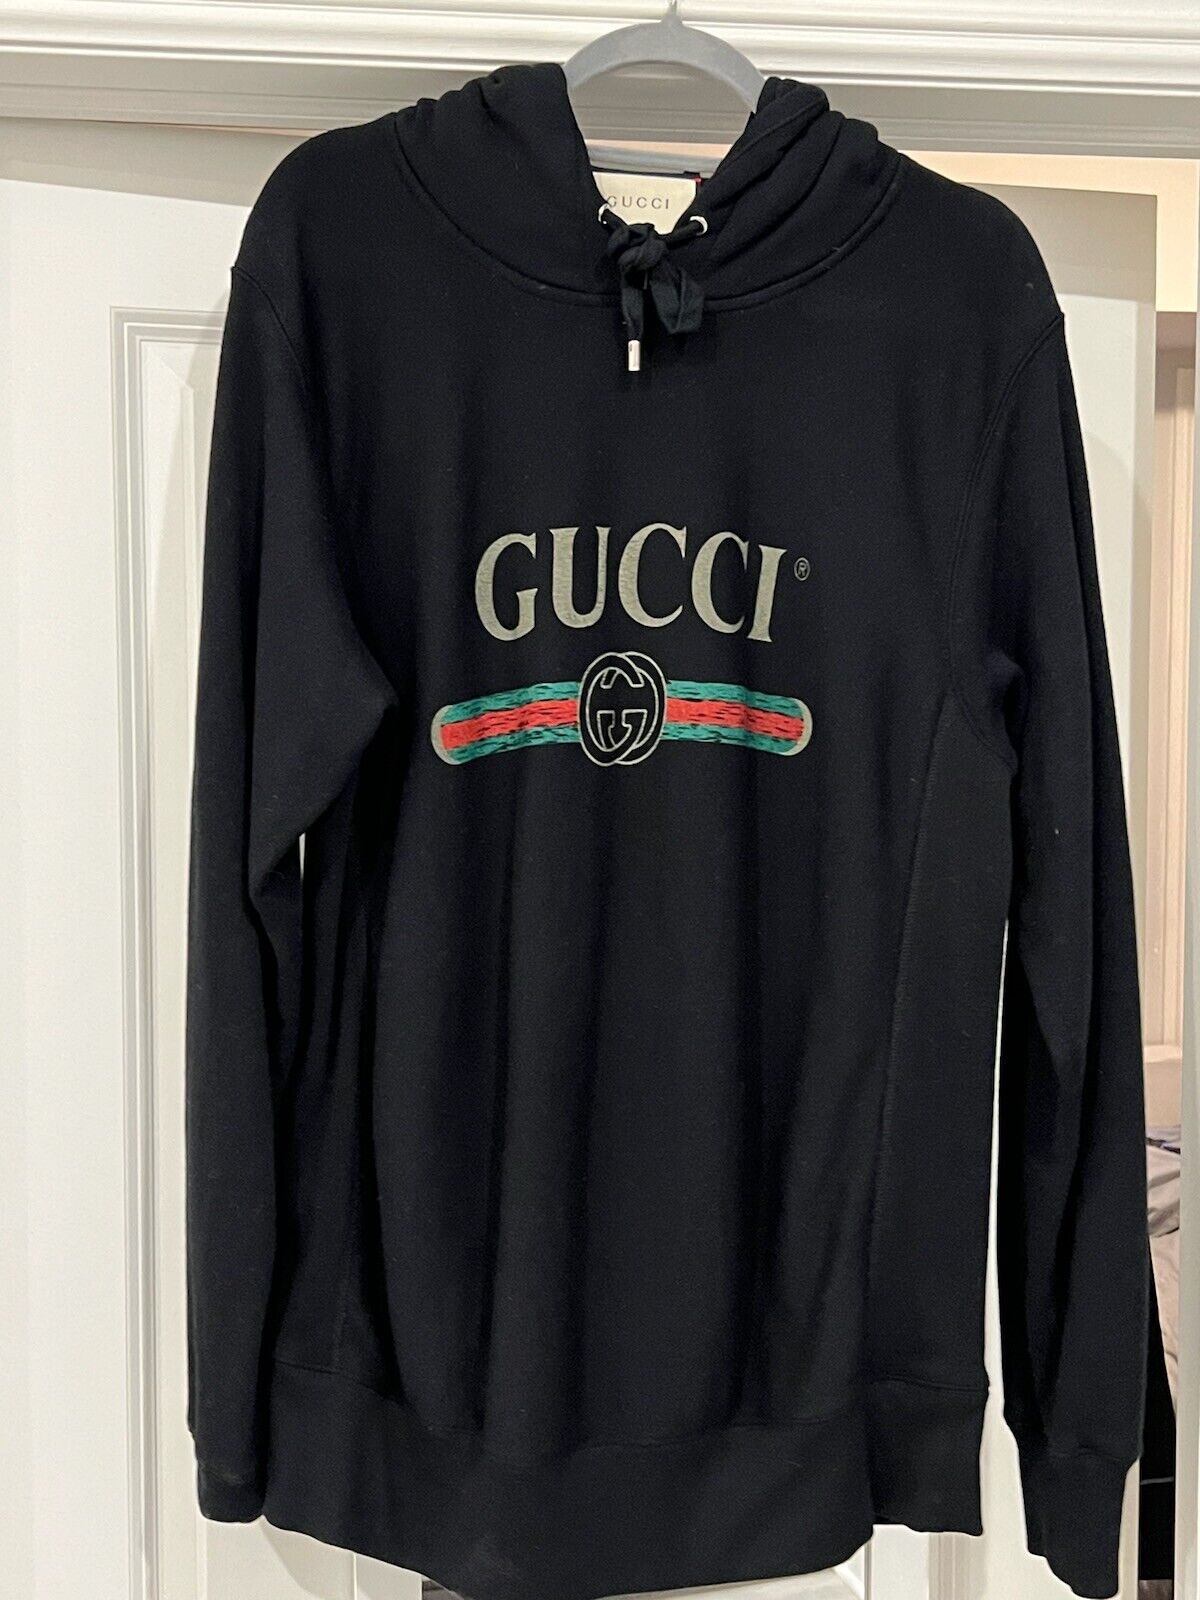 Gucci black hoodie size M | eBay